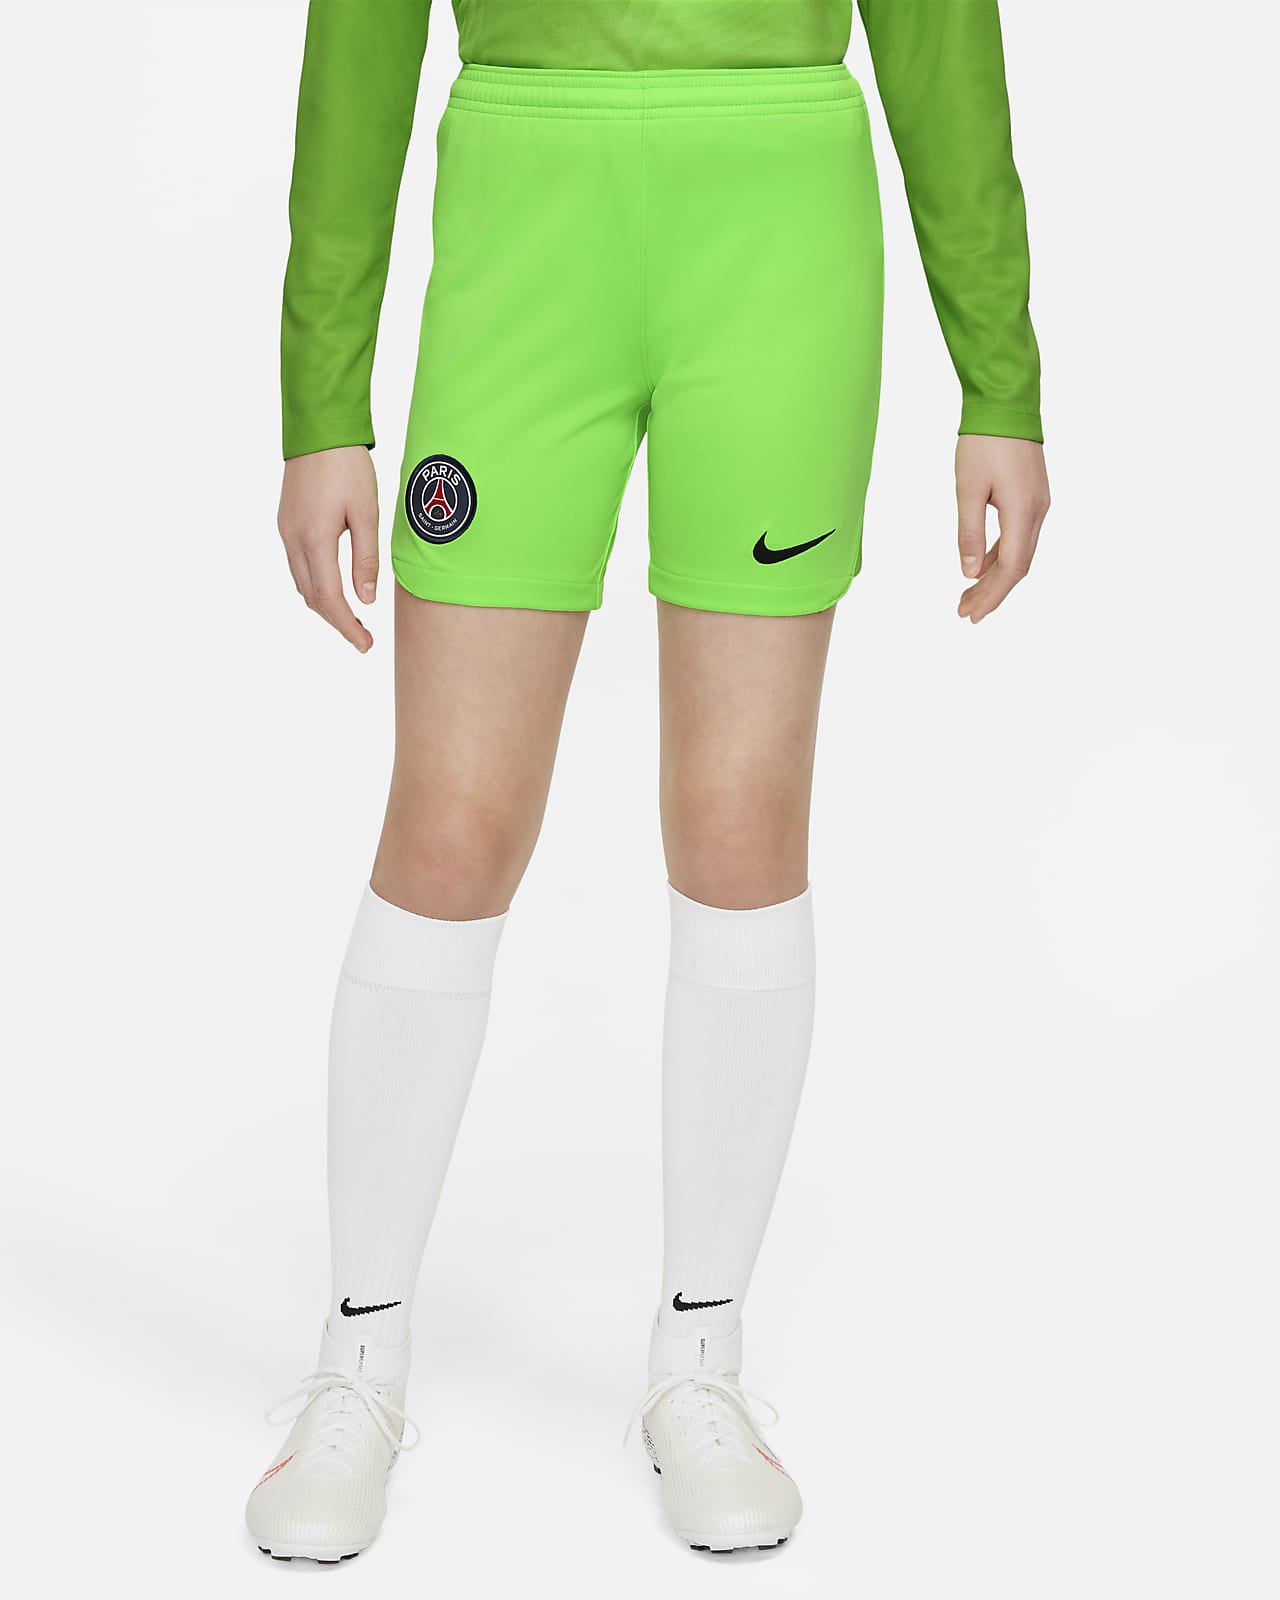 Long Pants Check available sizes Goalkeeper Soccer set $25 each 